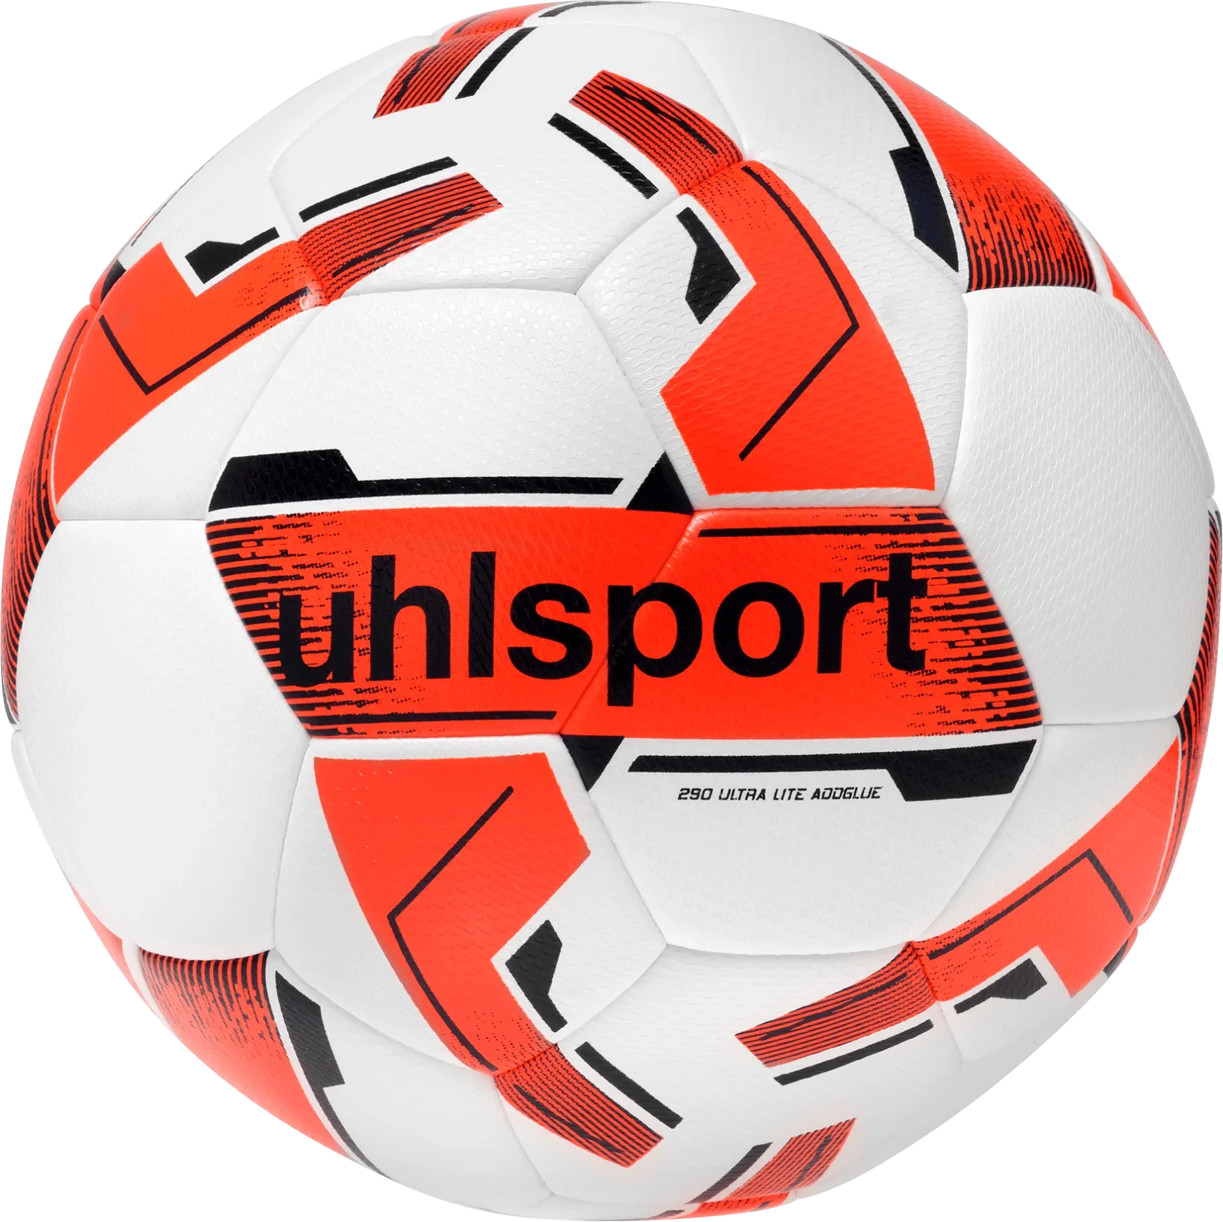 Uhlsport 290 Ultra Lite Addglue Trainingsball Labda